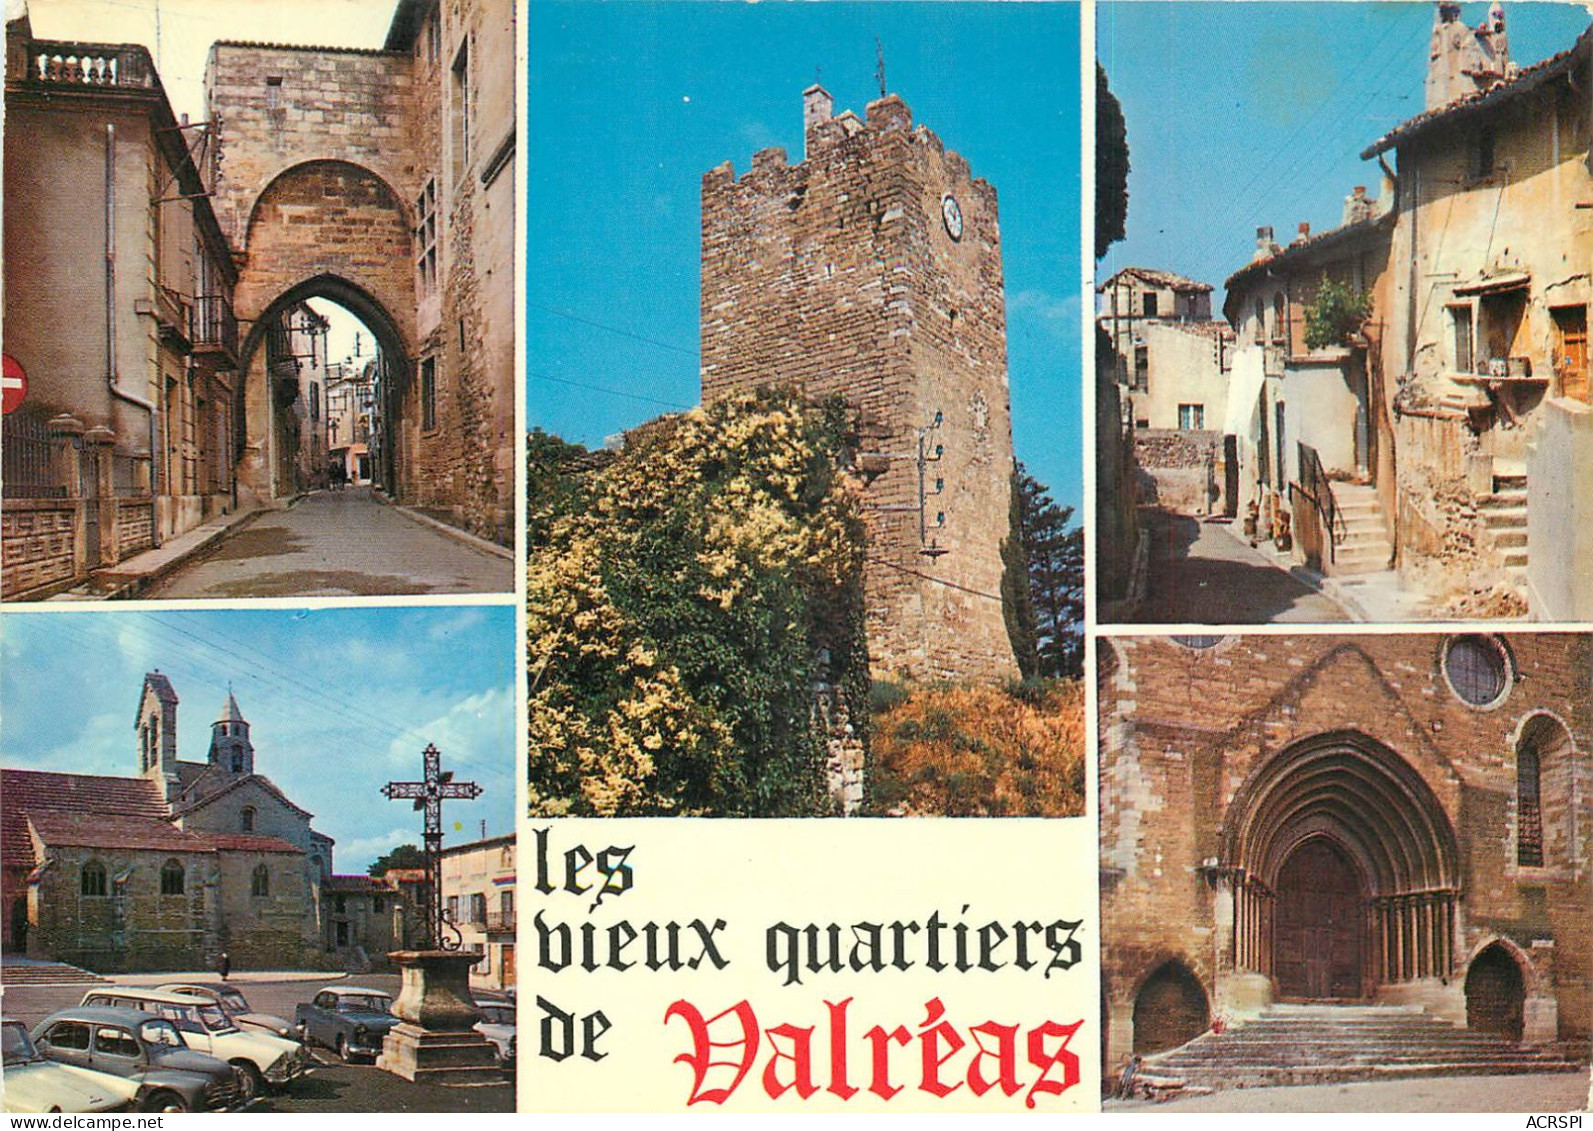 VALREAS Porte De Simiane, Tour De L Horloge, Vieille Rue, L Eglise.26(scan Recto Verso)MF2708 - Valreas